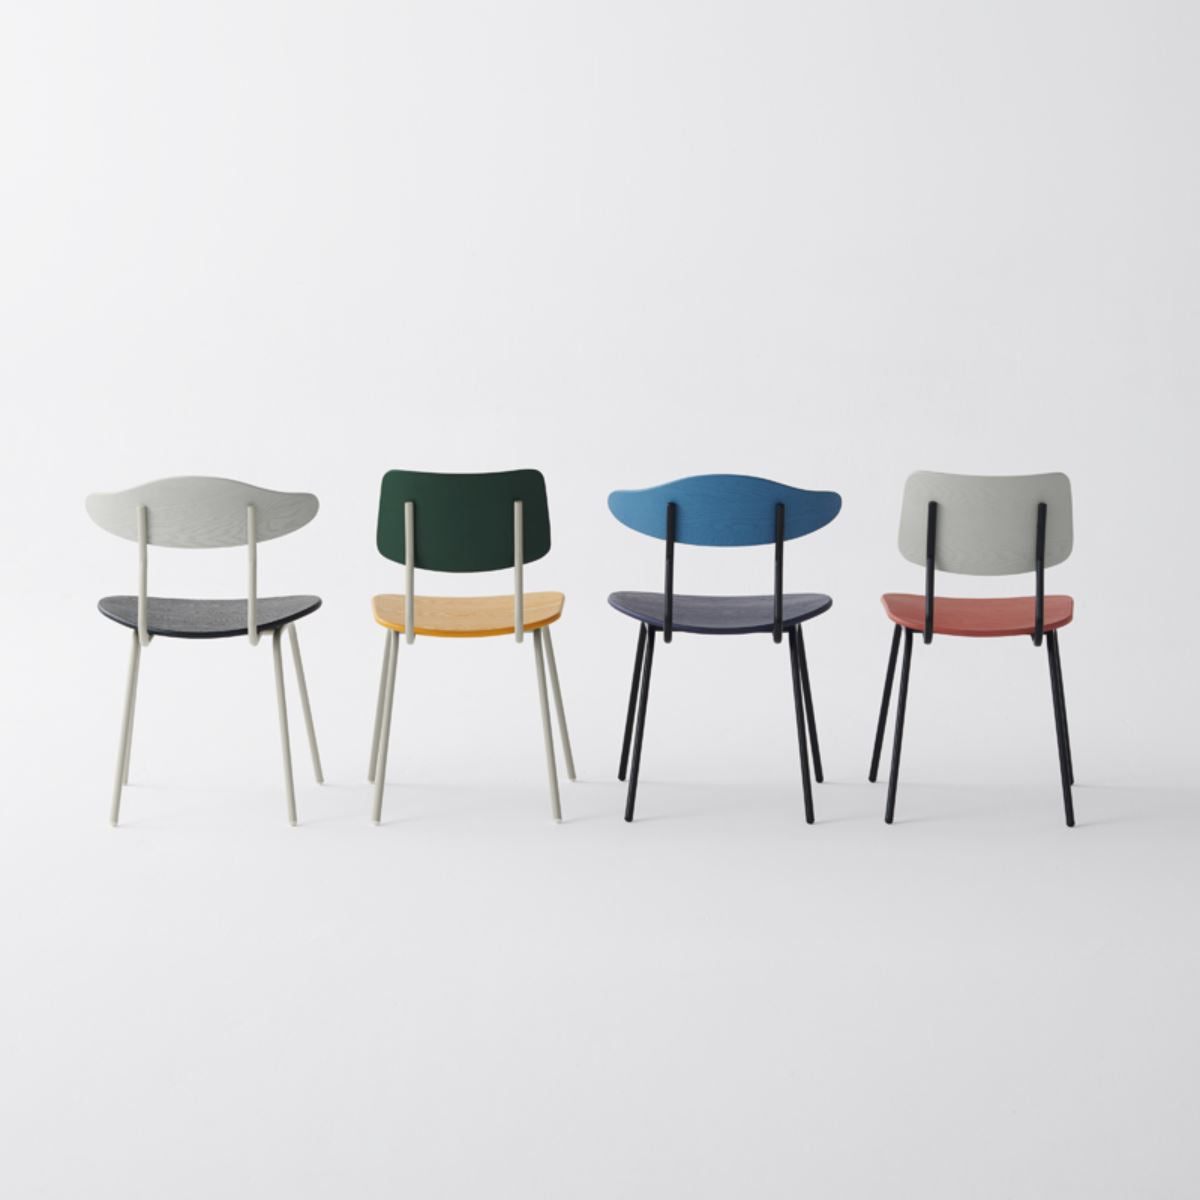 KUUM Chair shikaku - Green x Mustard Yellow x Gray White Steel Frame / クーム チェア シカク